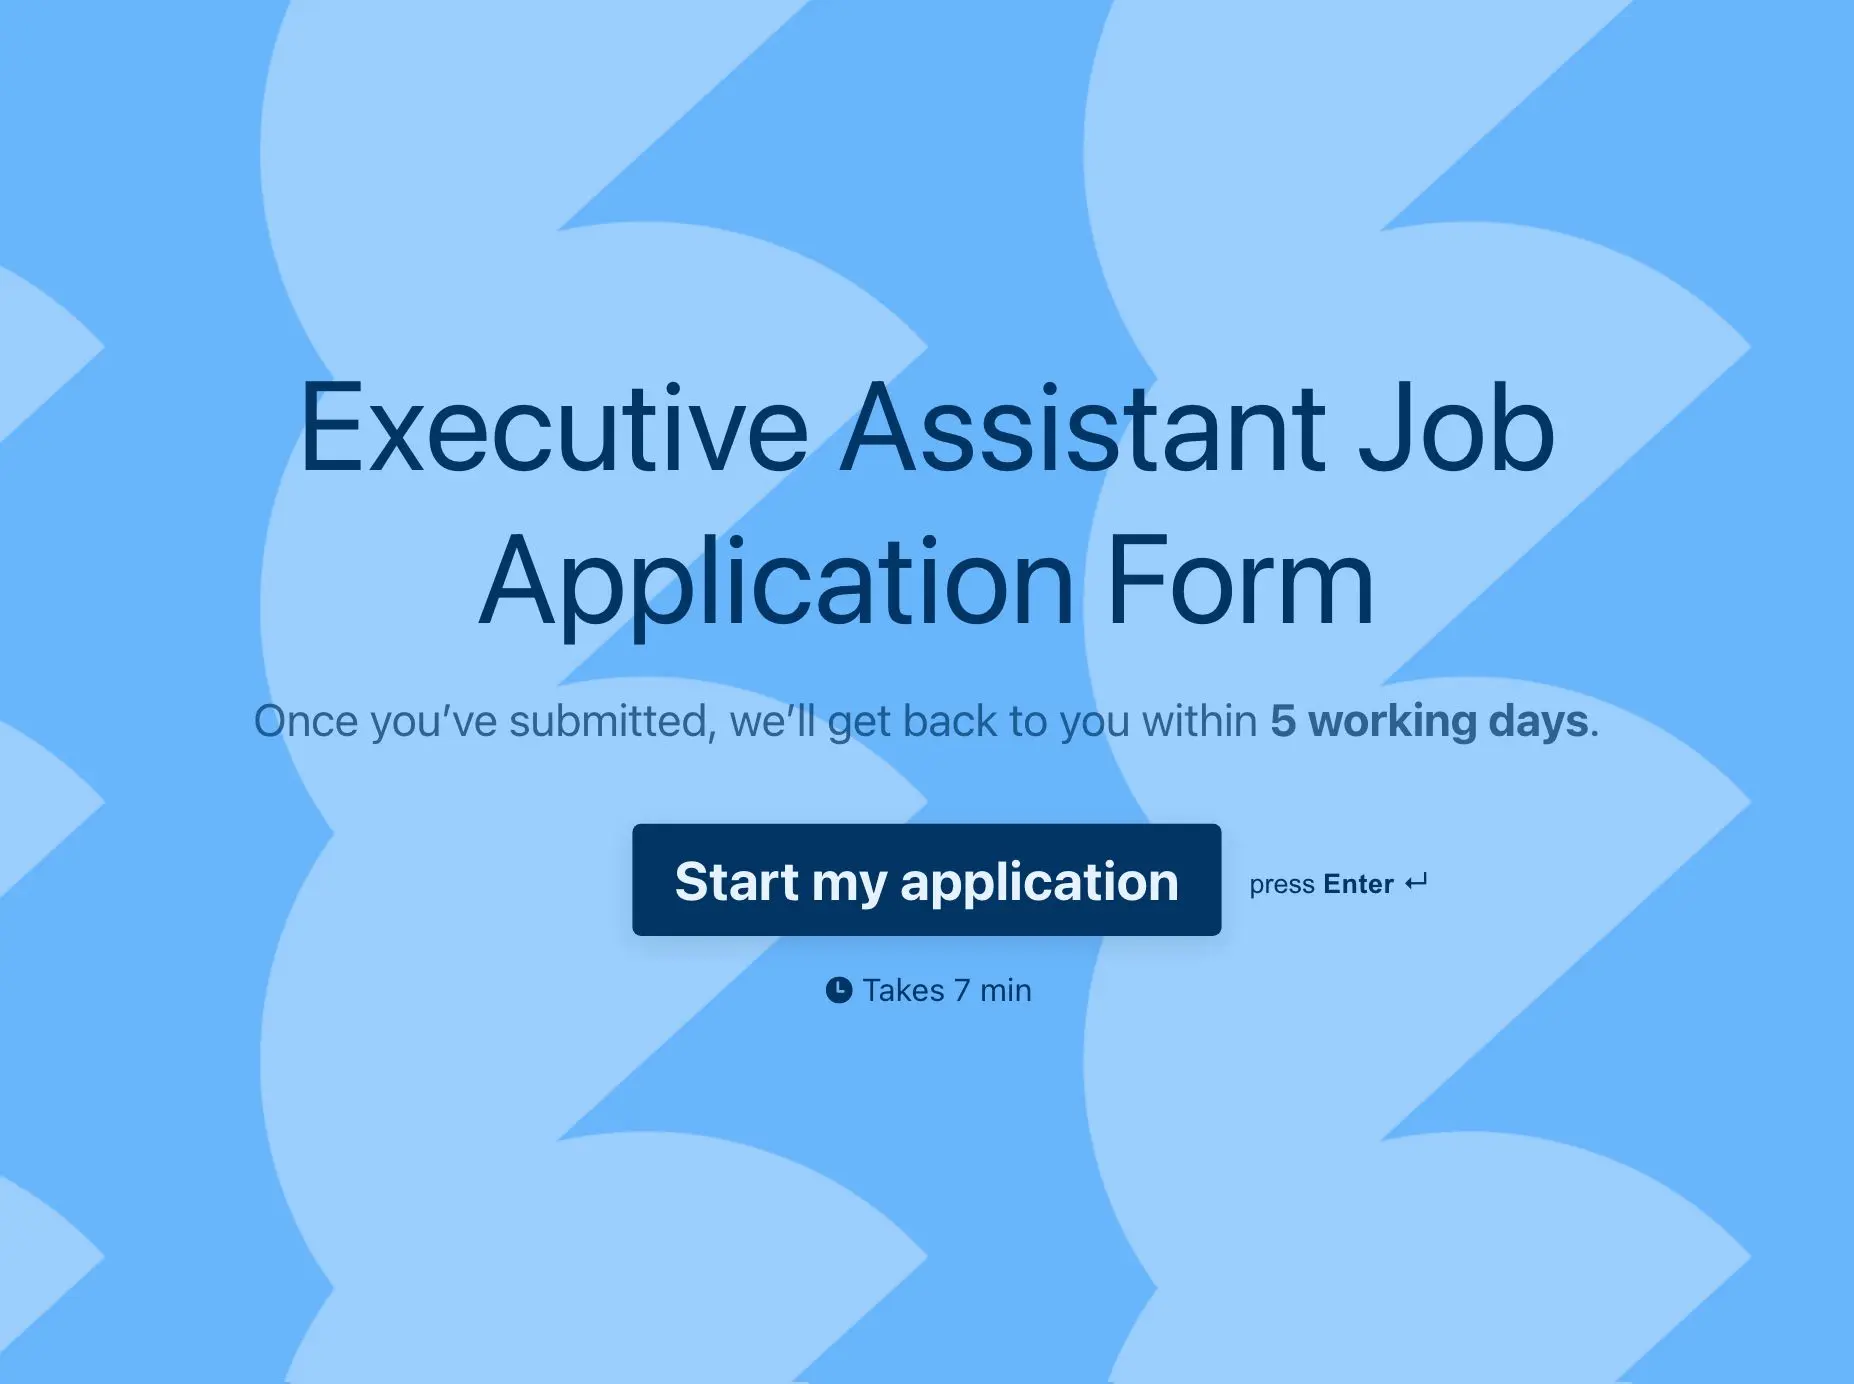 Executive Assistant Job Application Form Template Hero